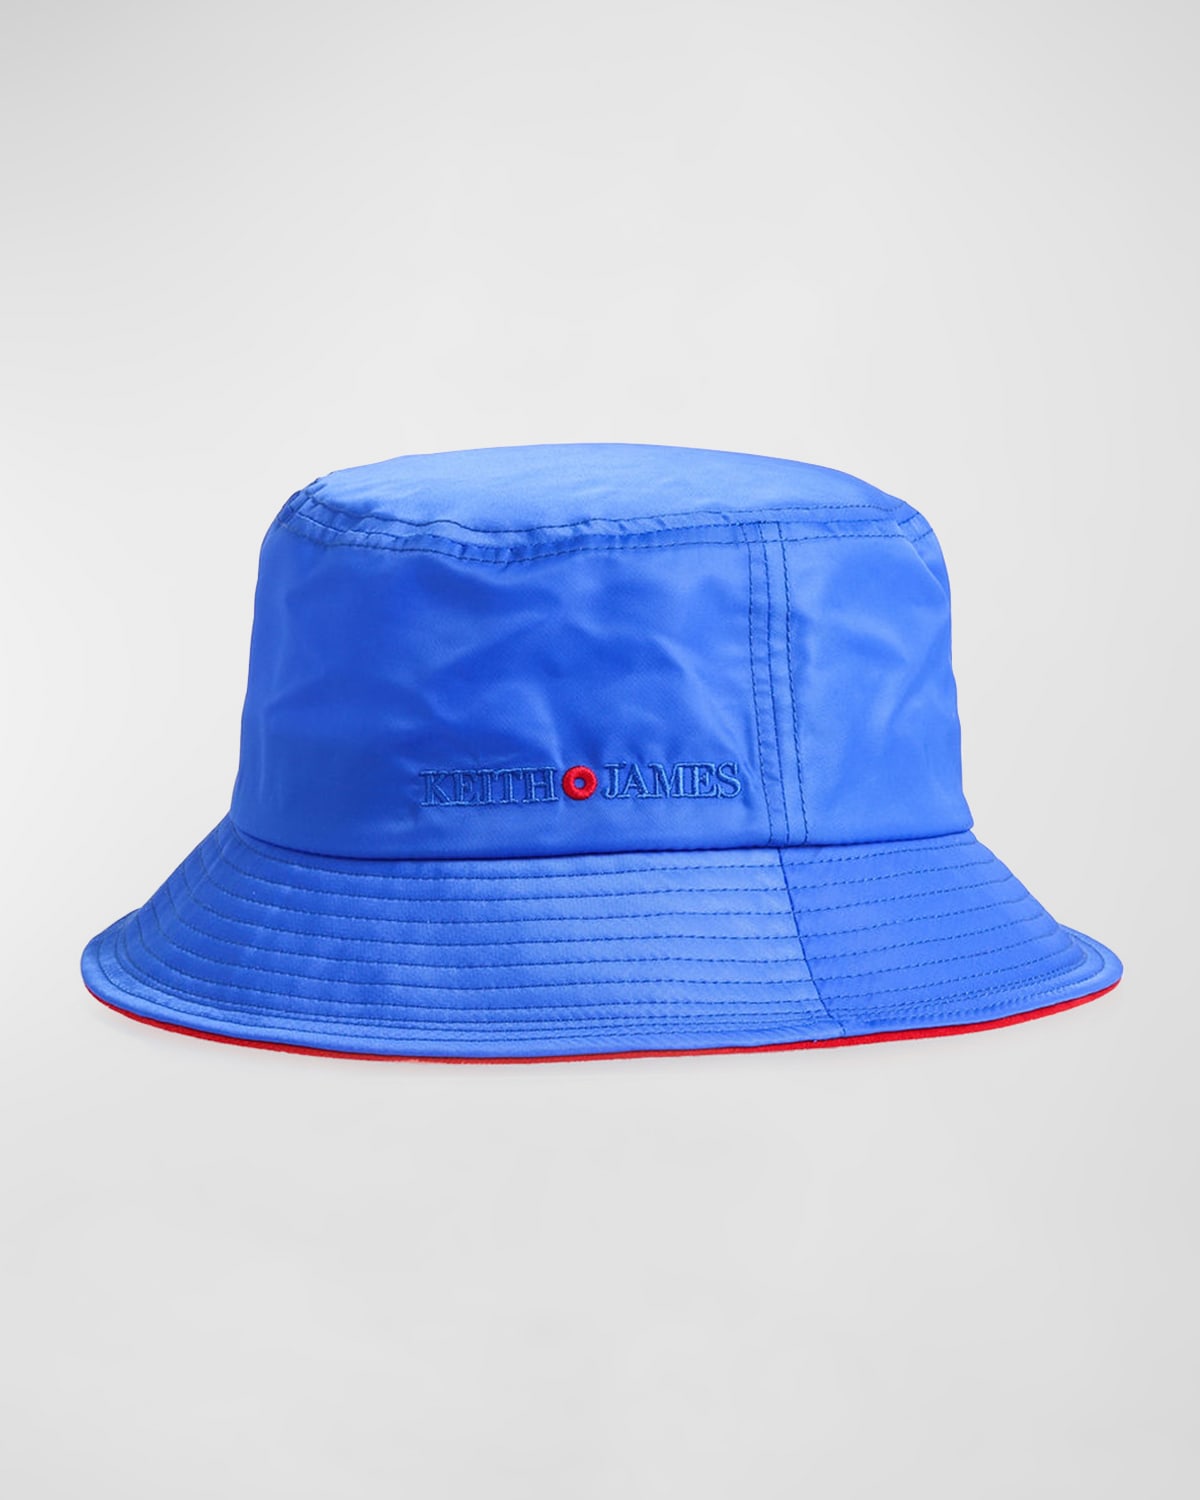 Keith James Men's Logo Nylon Bucket Hat